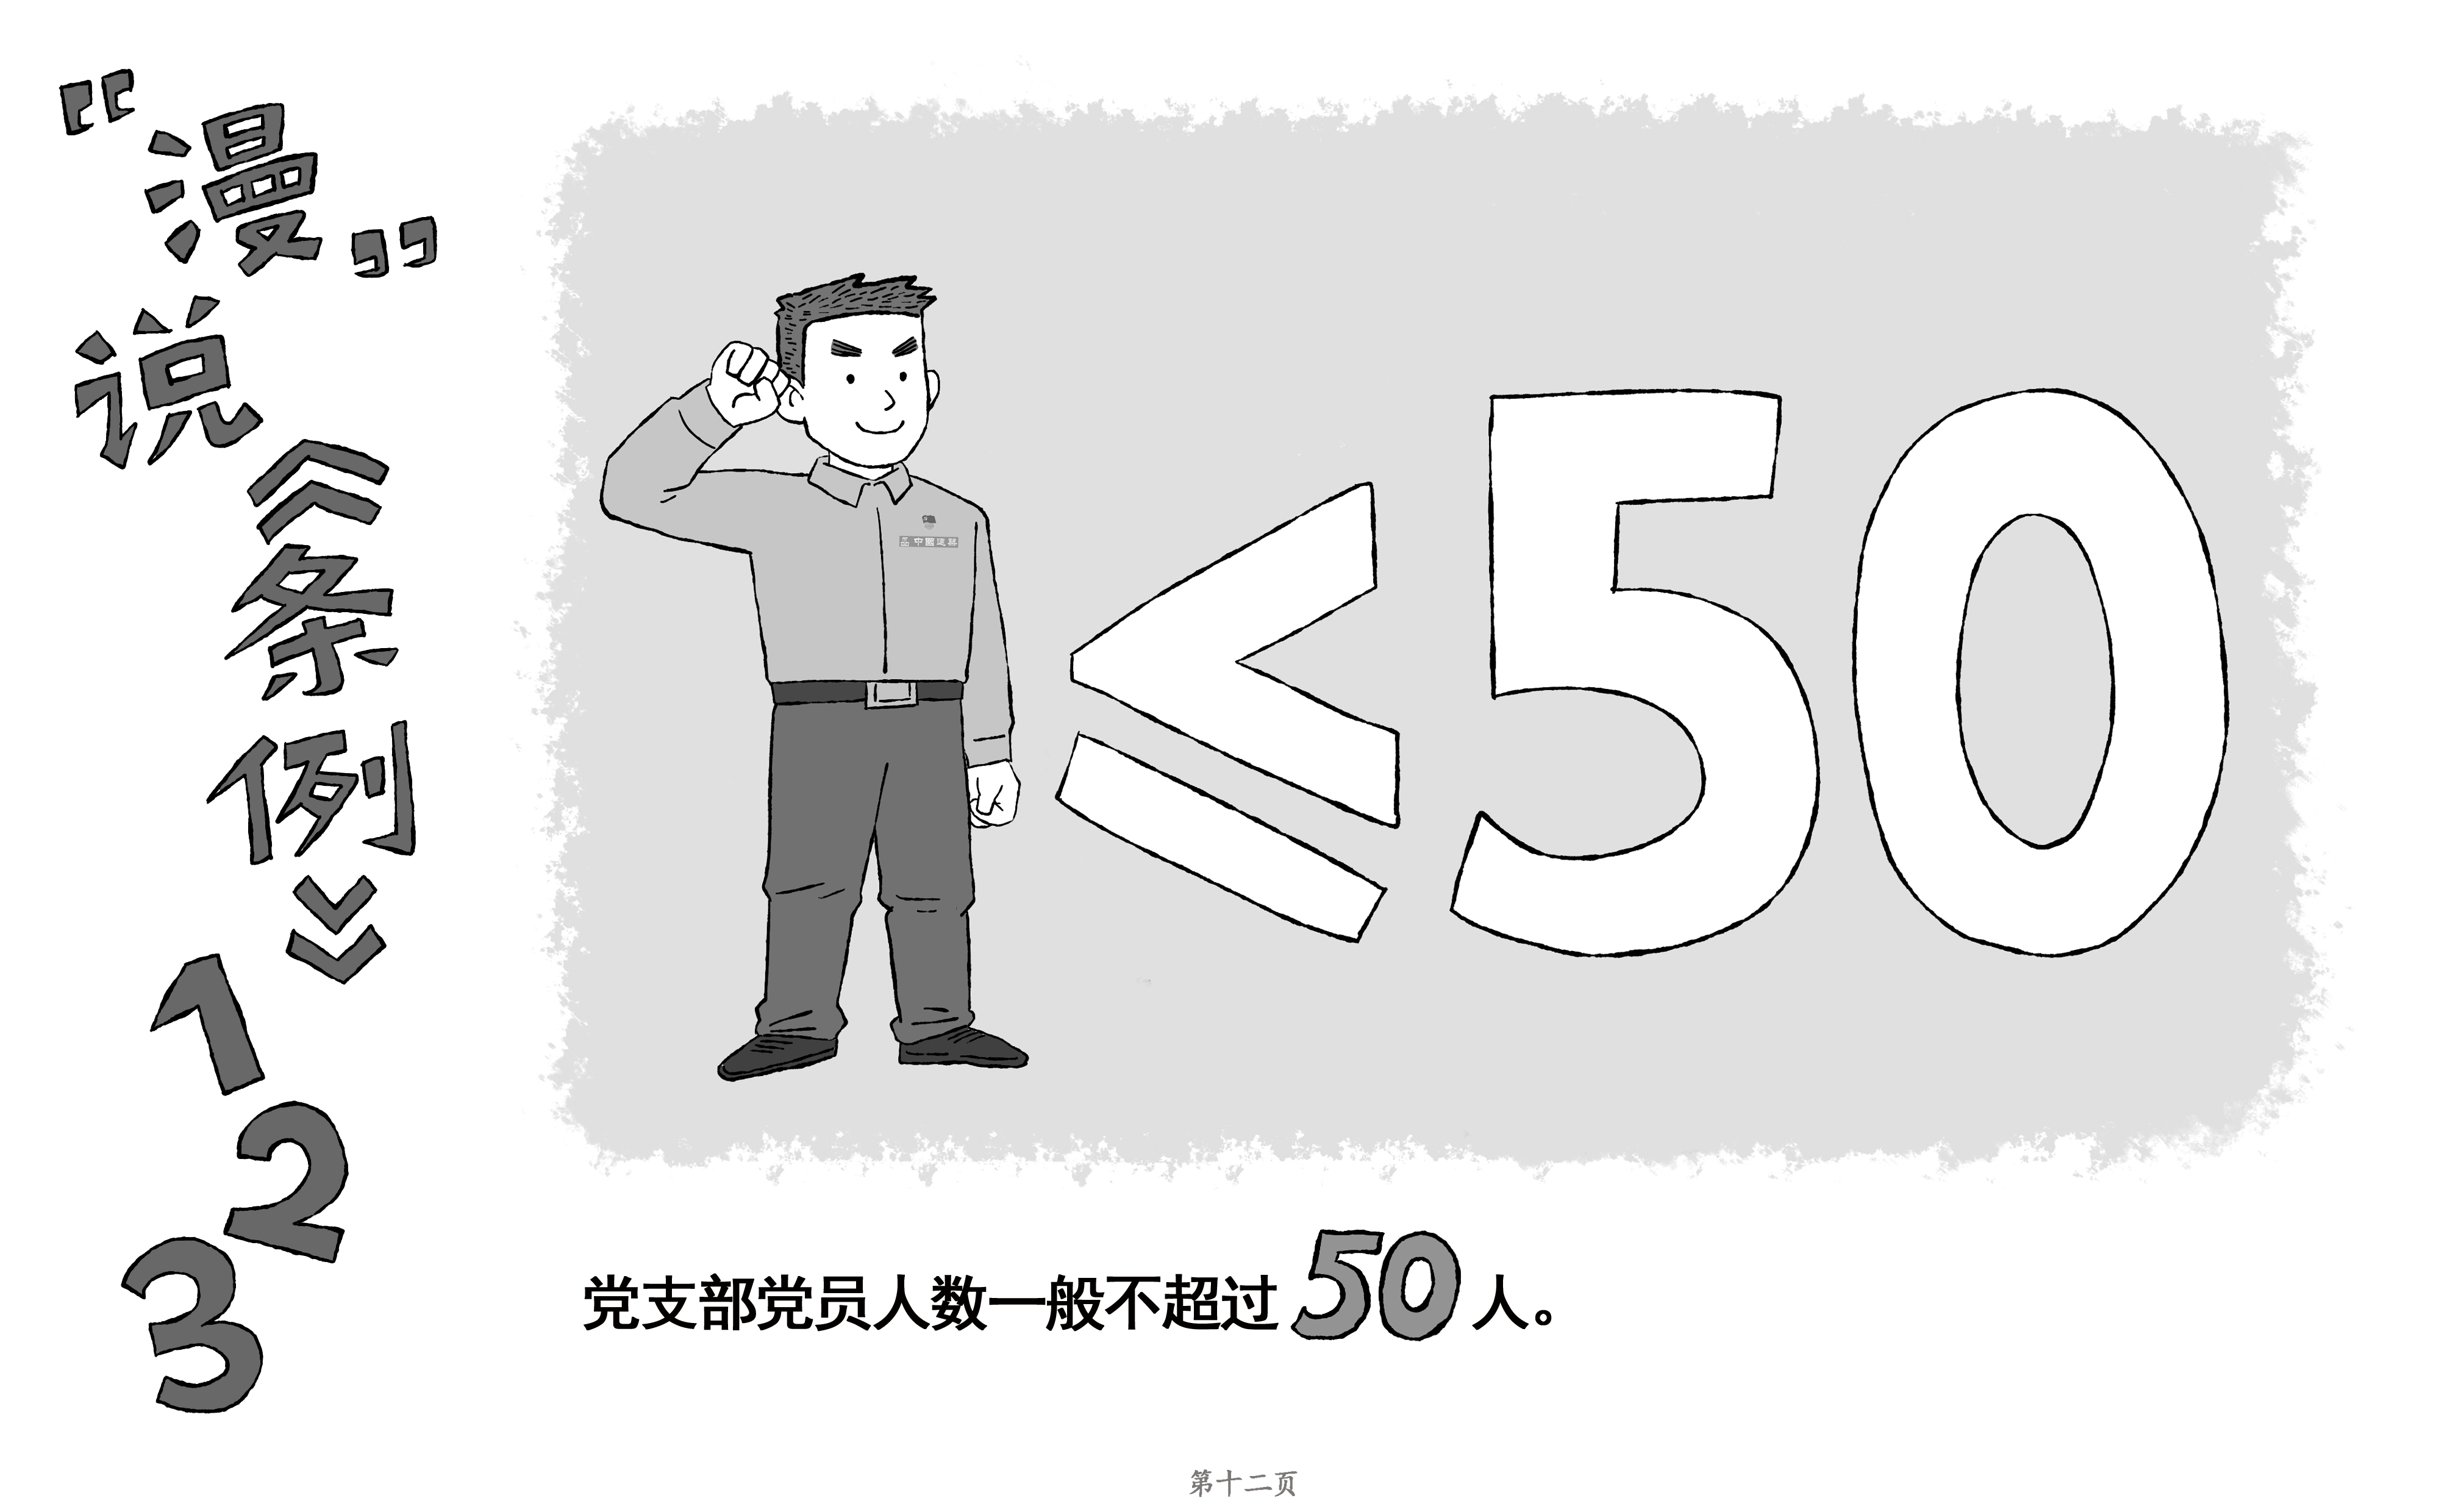 [PPT]中建二局装饰工程有限公司《“数”说《条例》原创漫画——中国共产党支部工作条例》